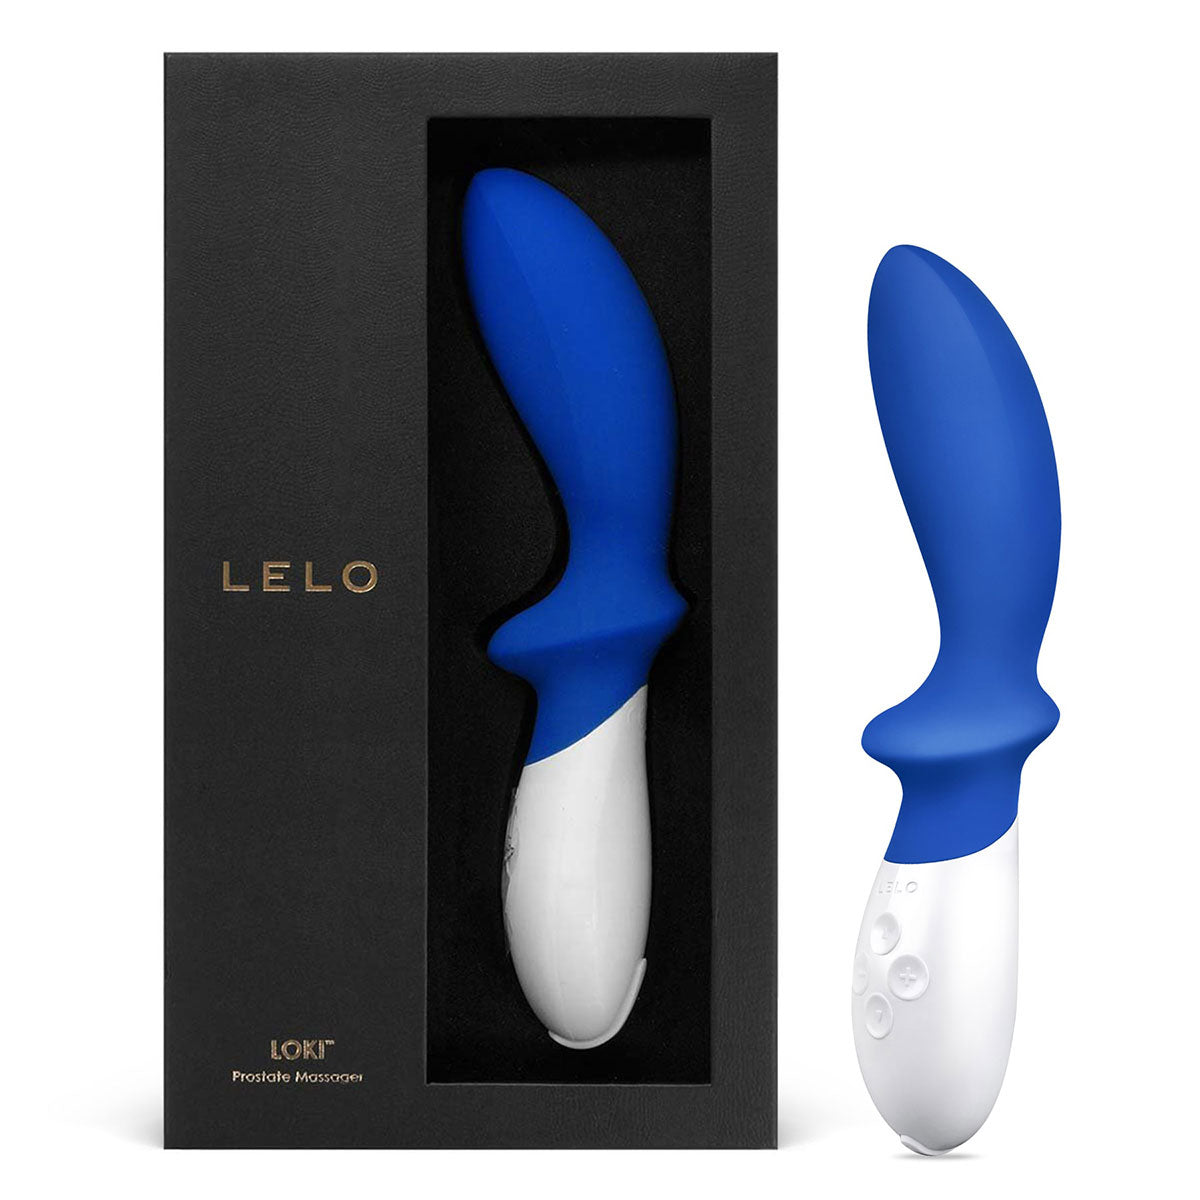 LELO Intimacy Devices LELO Loki - Federal Blue